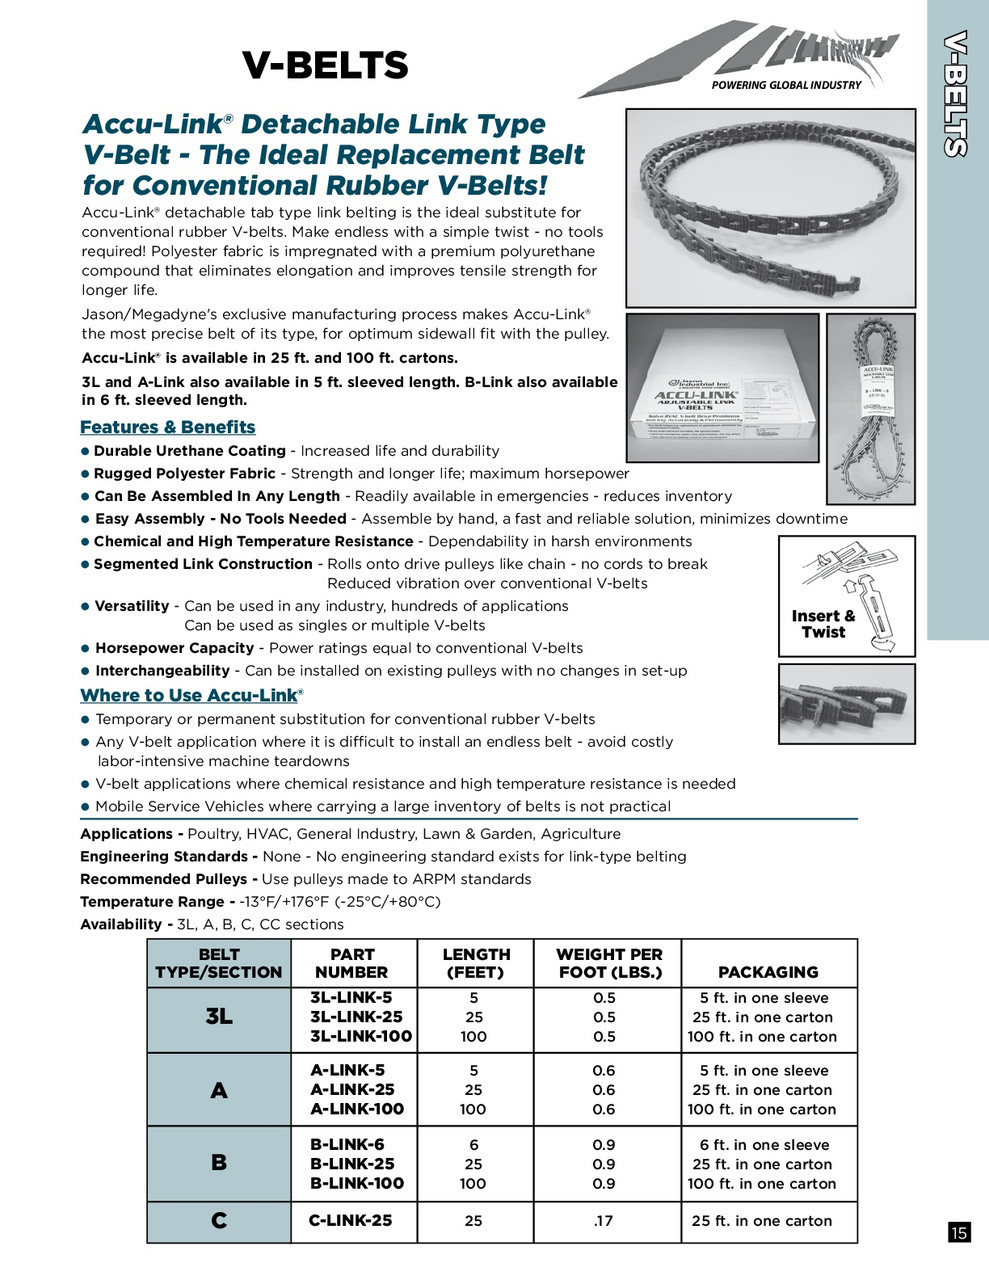 3/8" Accu-Link® Connectible V-Belt Material 3L-LINK